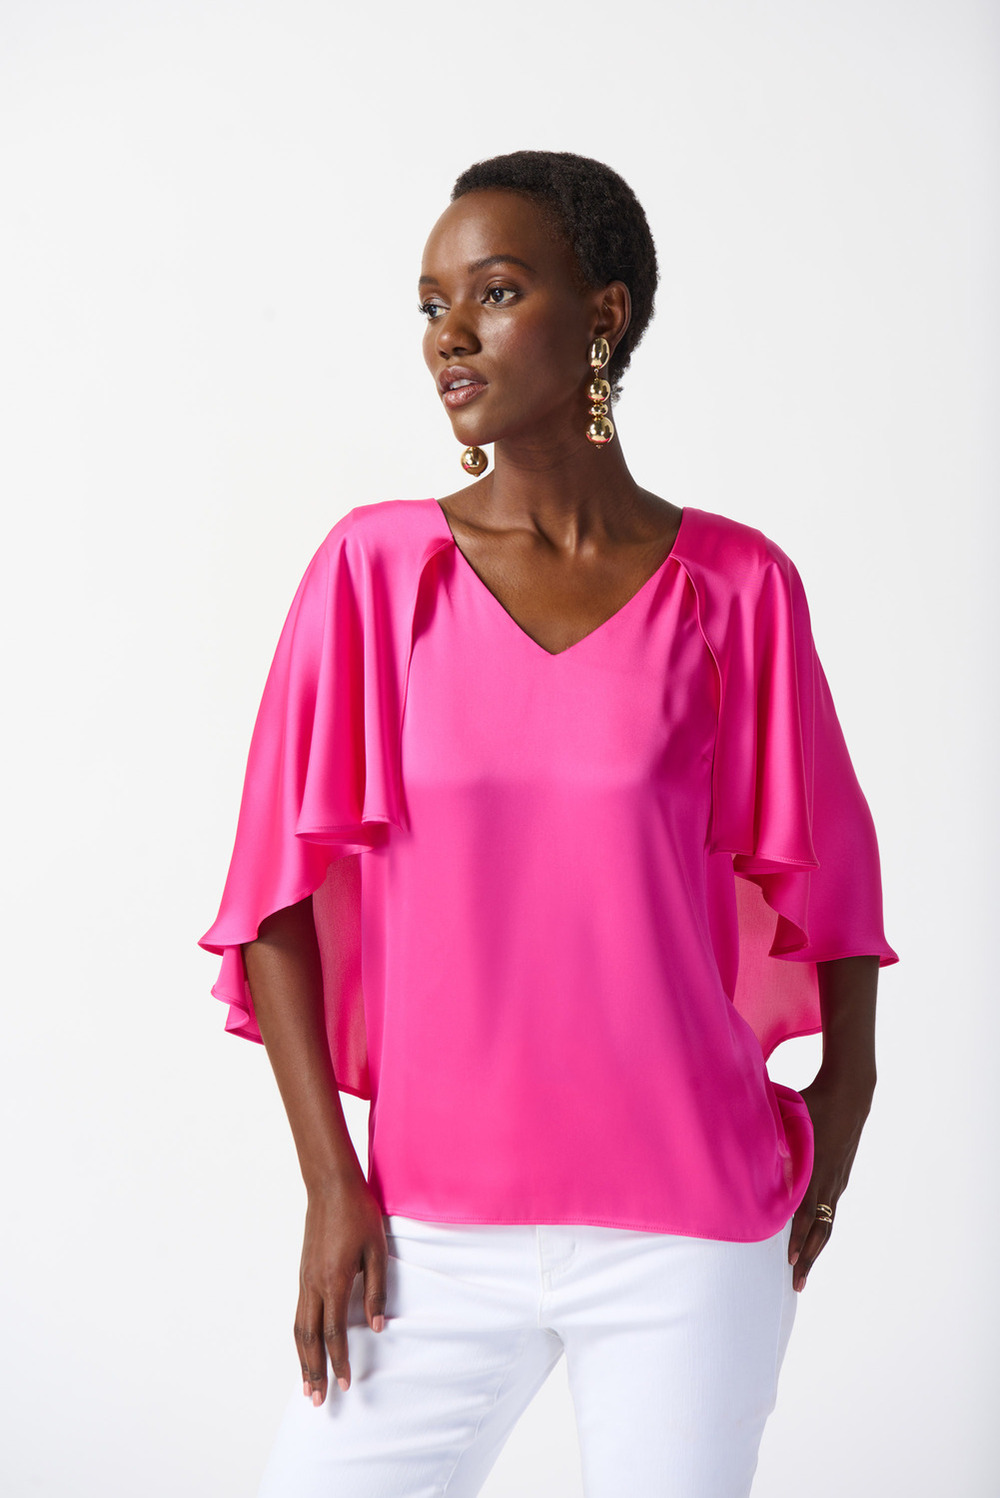 Silky Flowy Sleeve Top Style 242202. Ultra Pink